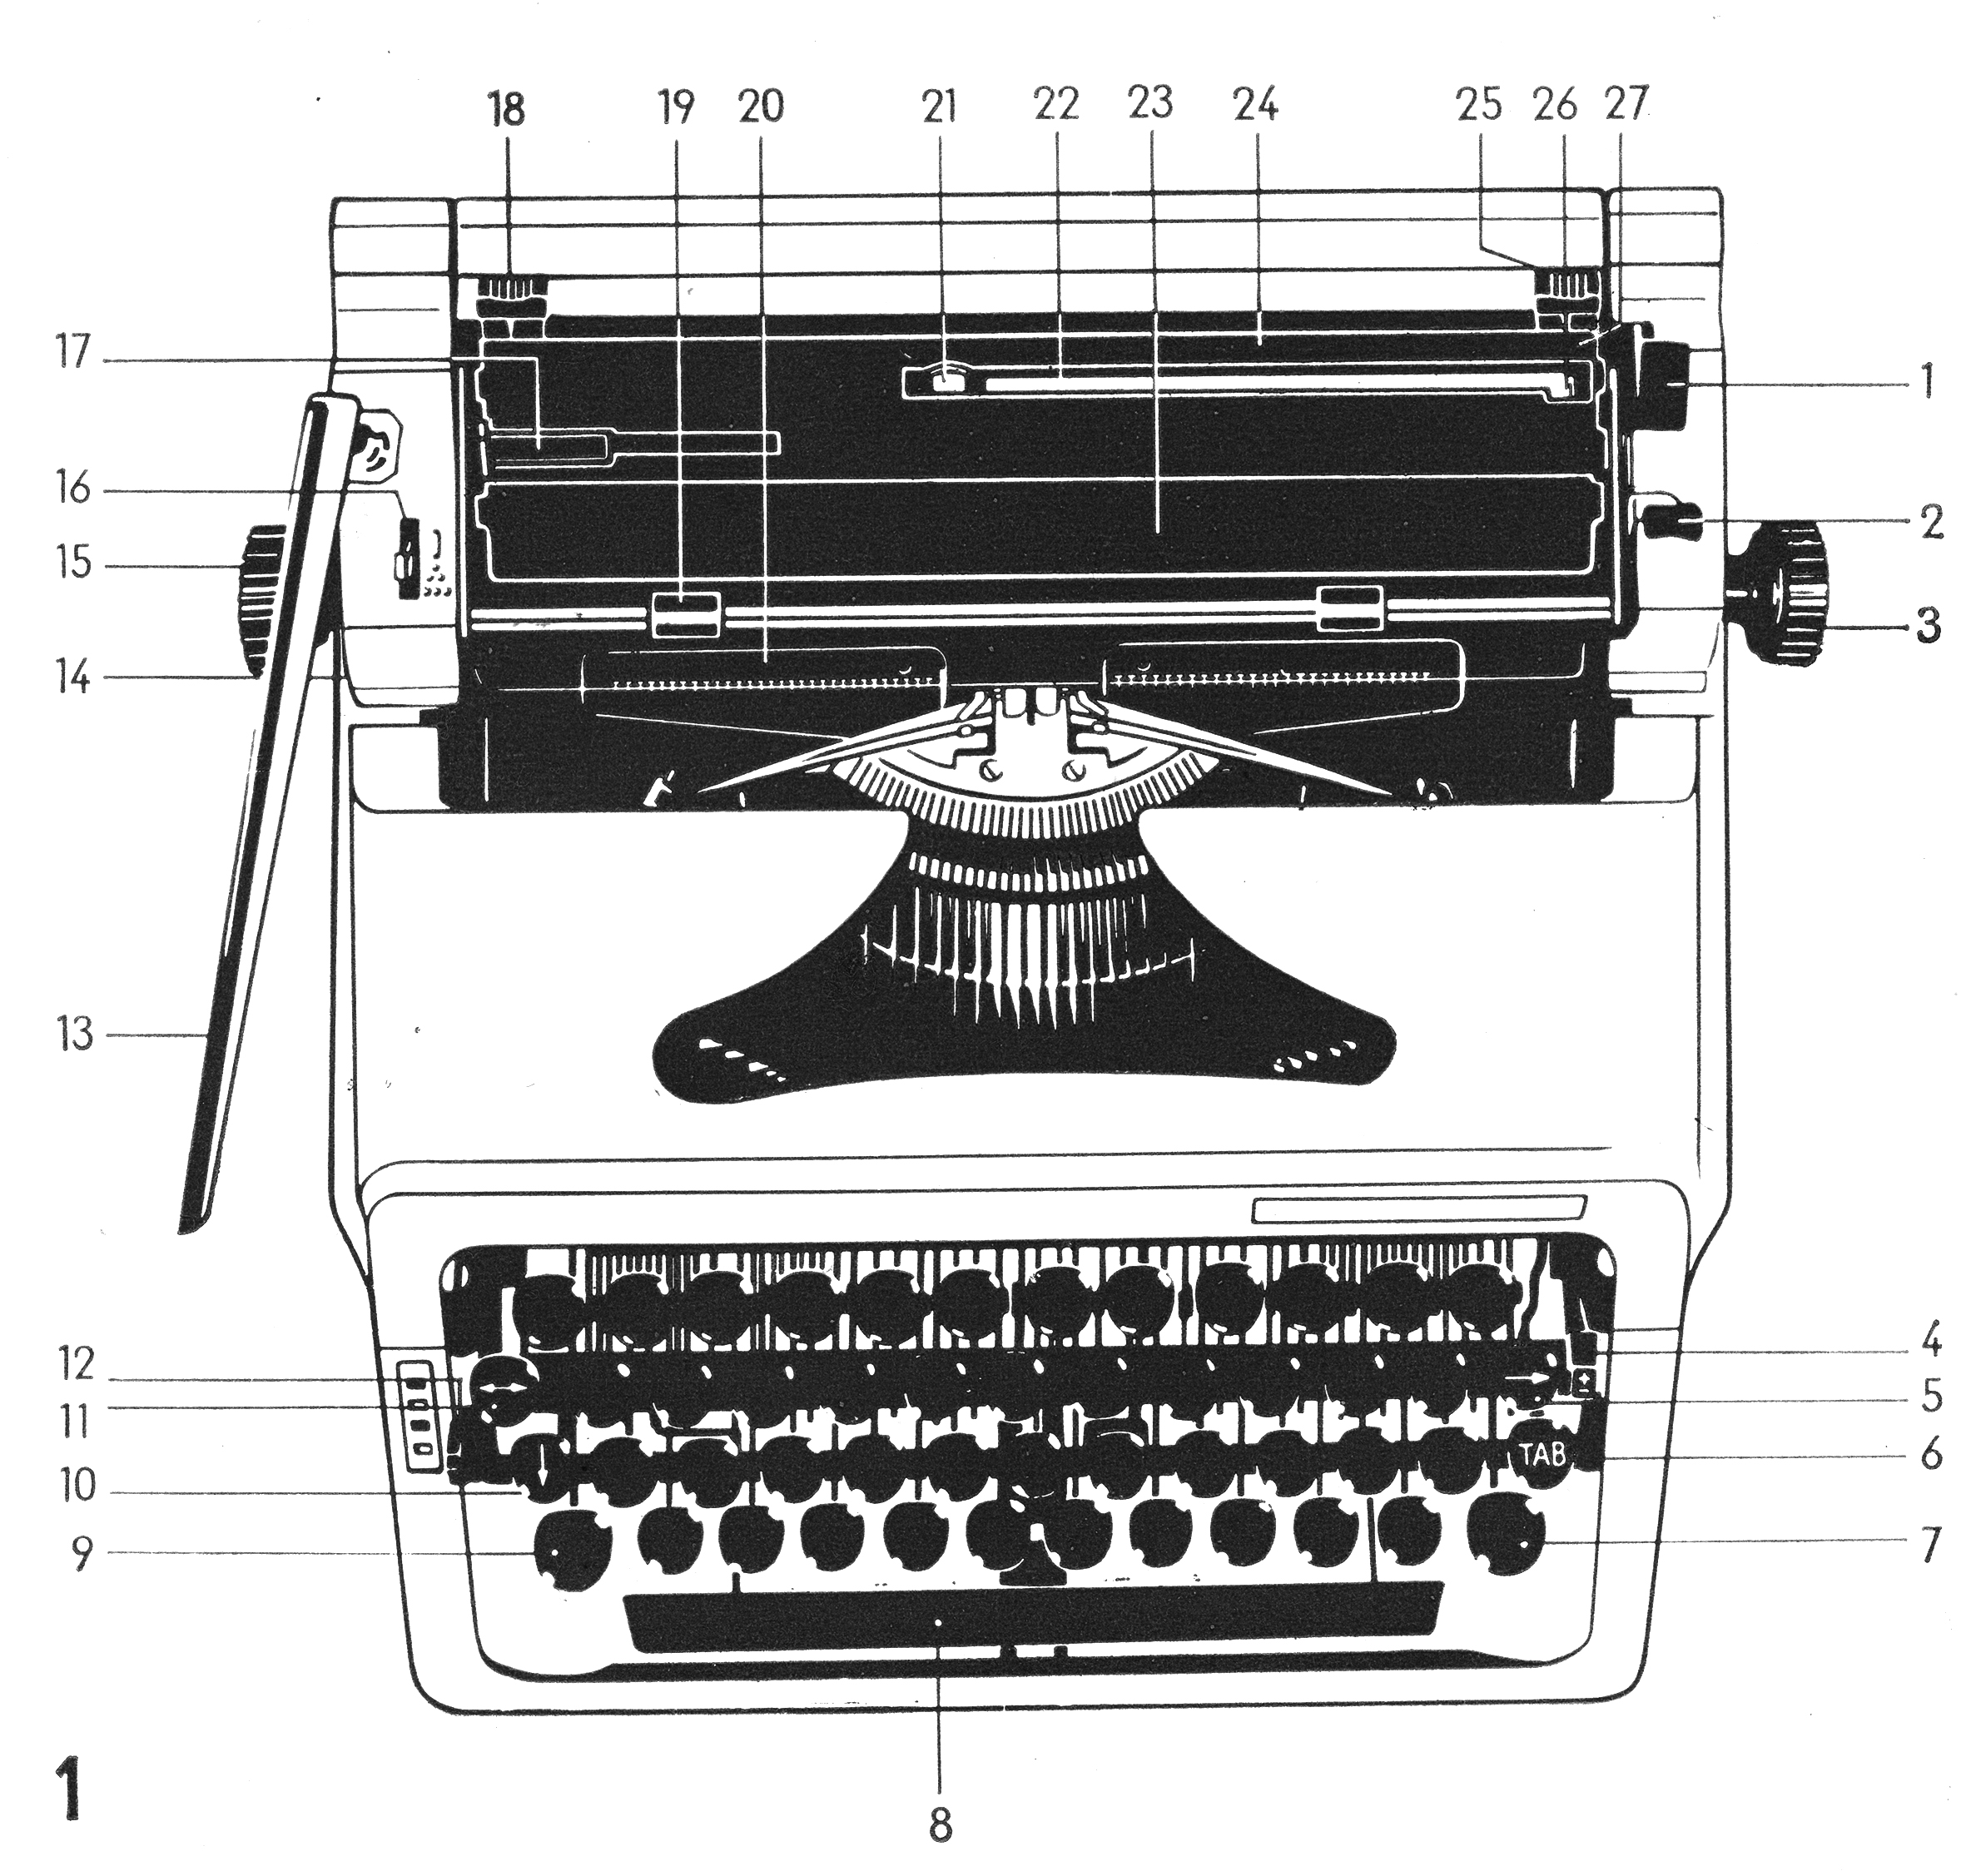 Optima Typewriter Image 02 small BW